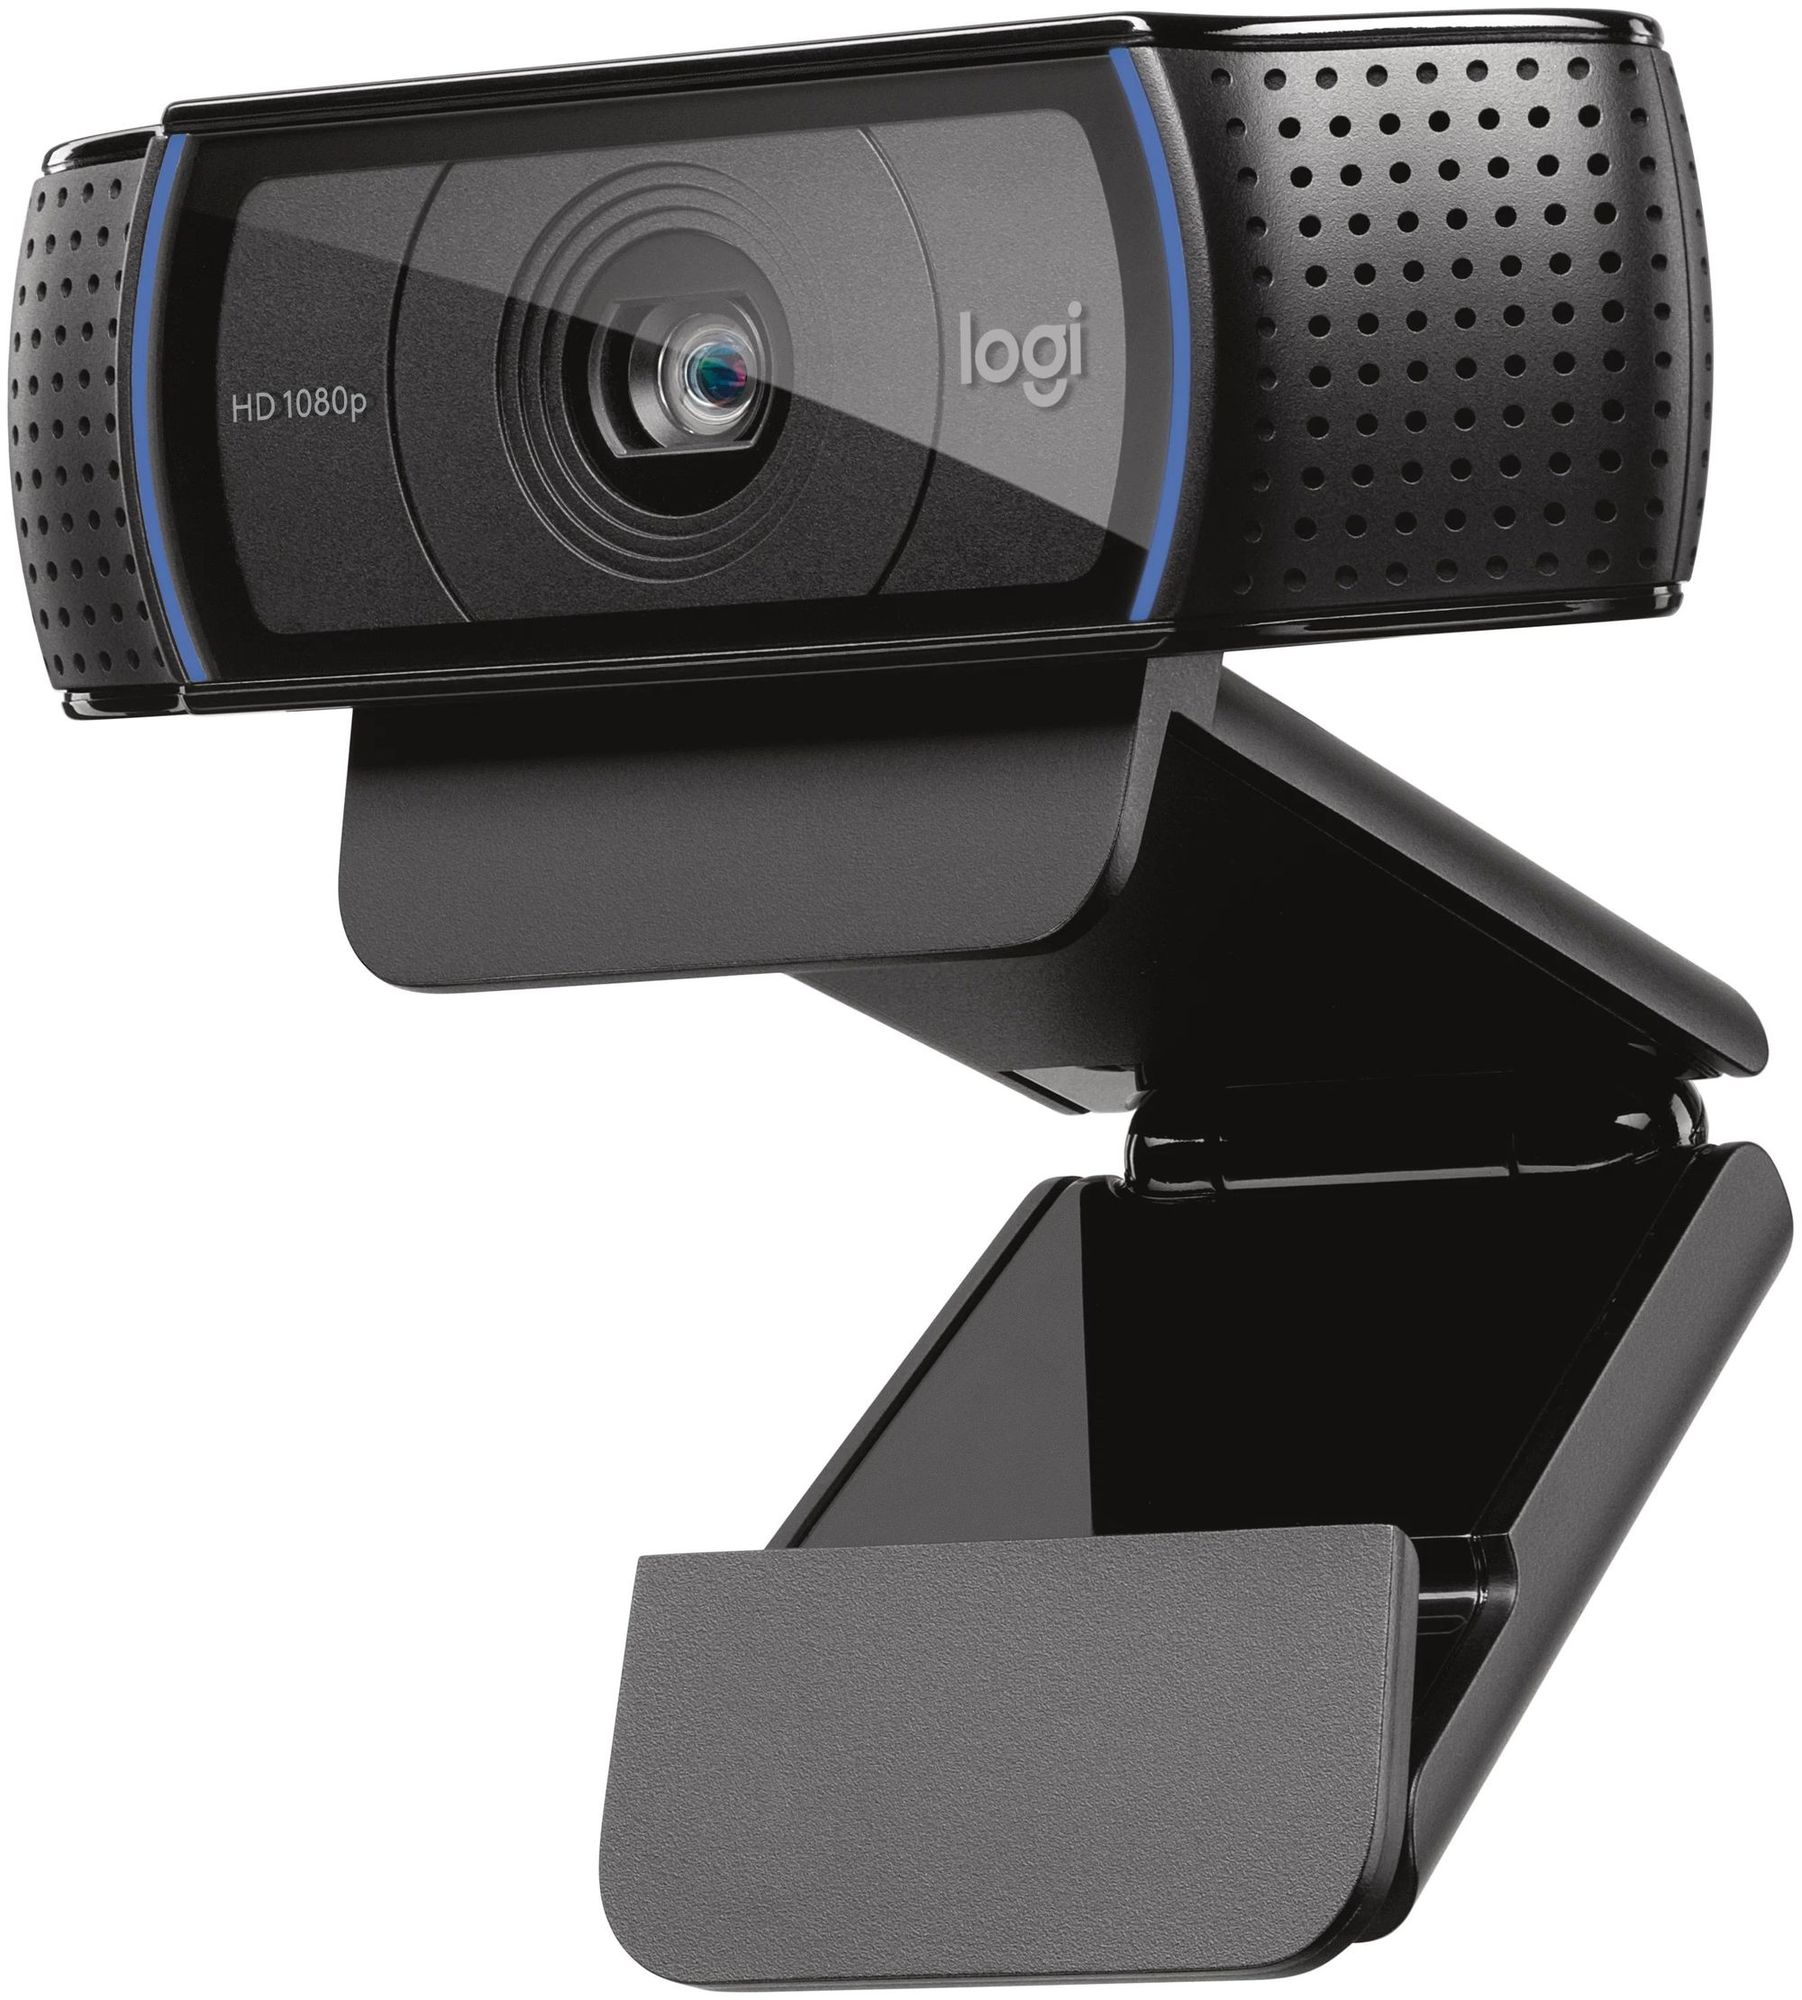 Веб-камера Logitech HD Pro Webcam C920 Black (960-000998) веб камера logitech c920 hd pro webcam full hd 1080p 30fps автофокус угол обзора 78° стереомикрофон кабель 1 5м арт 960 000998 m n vu0062